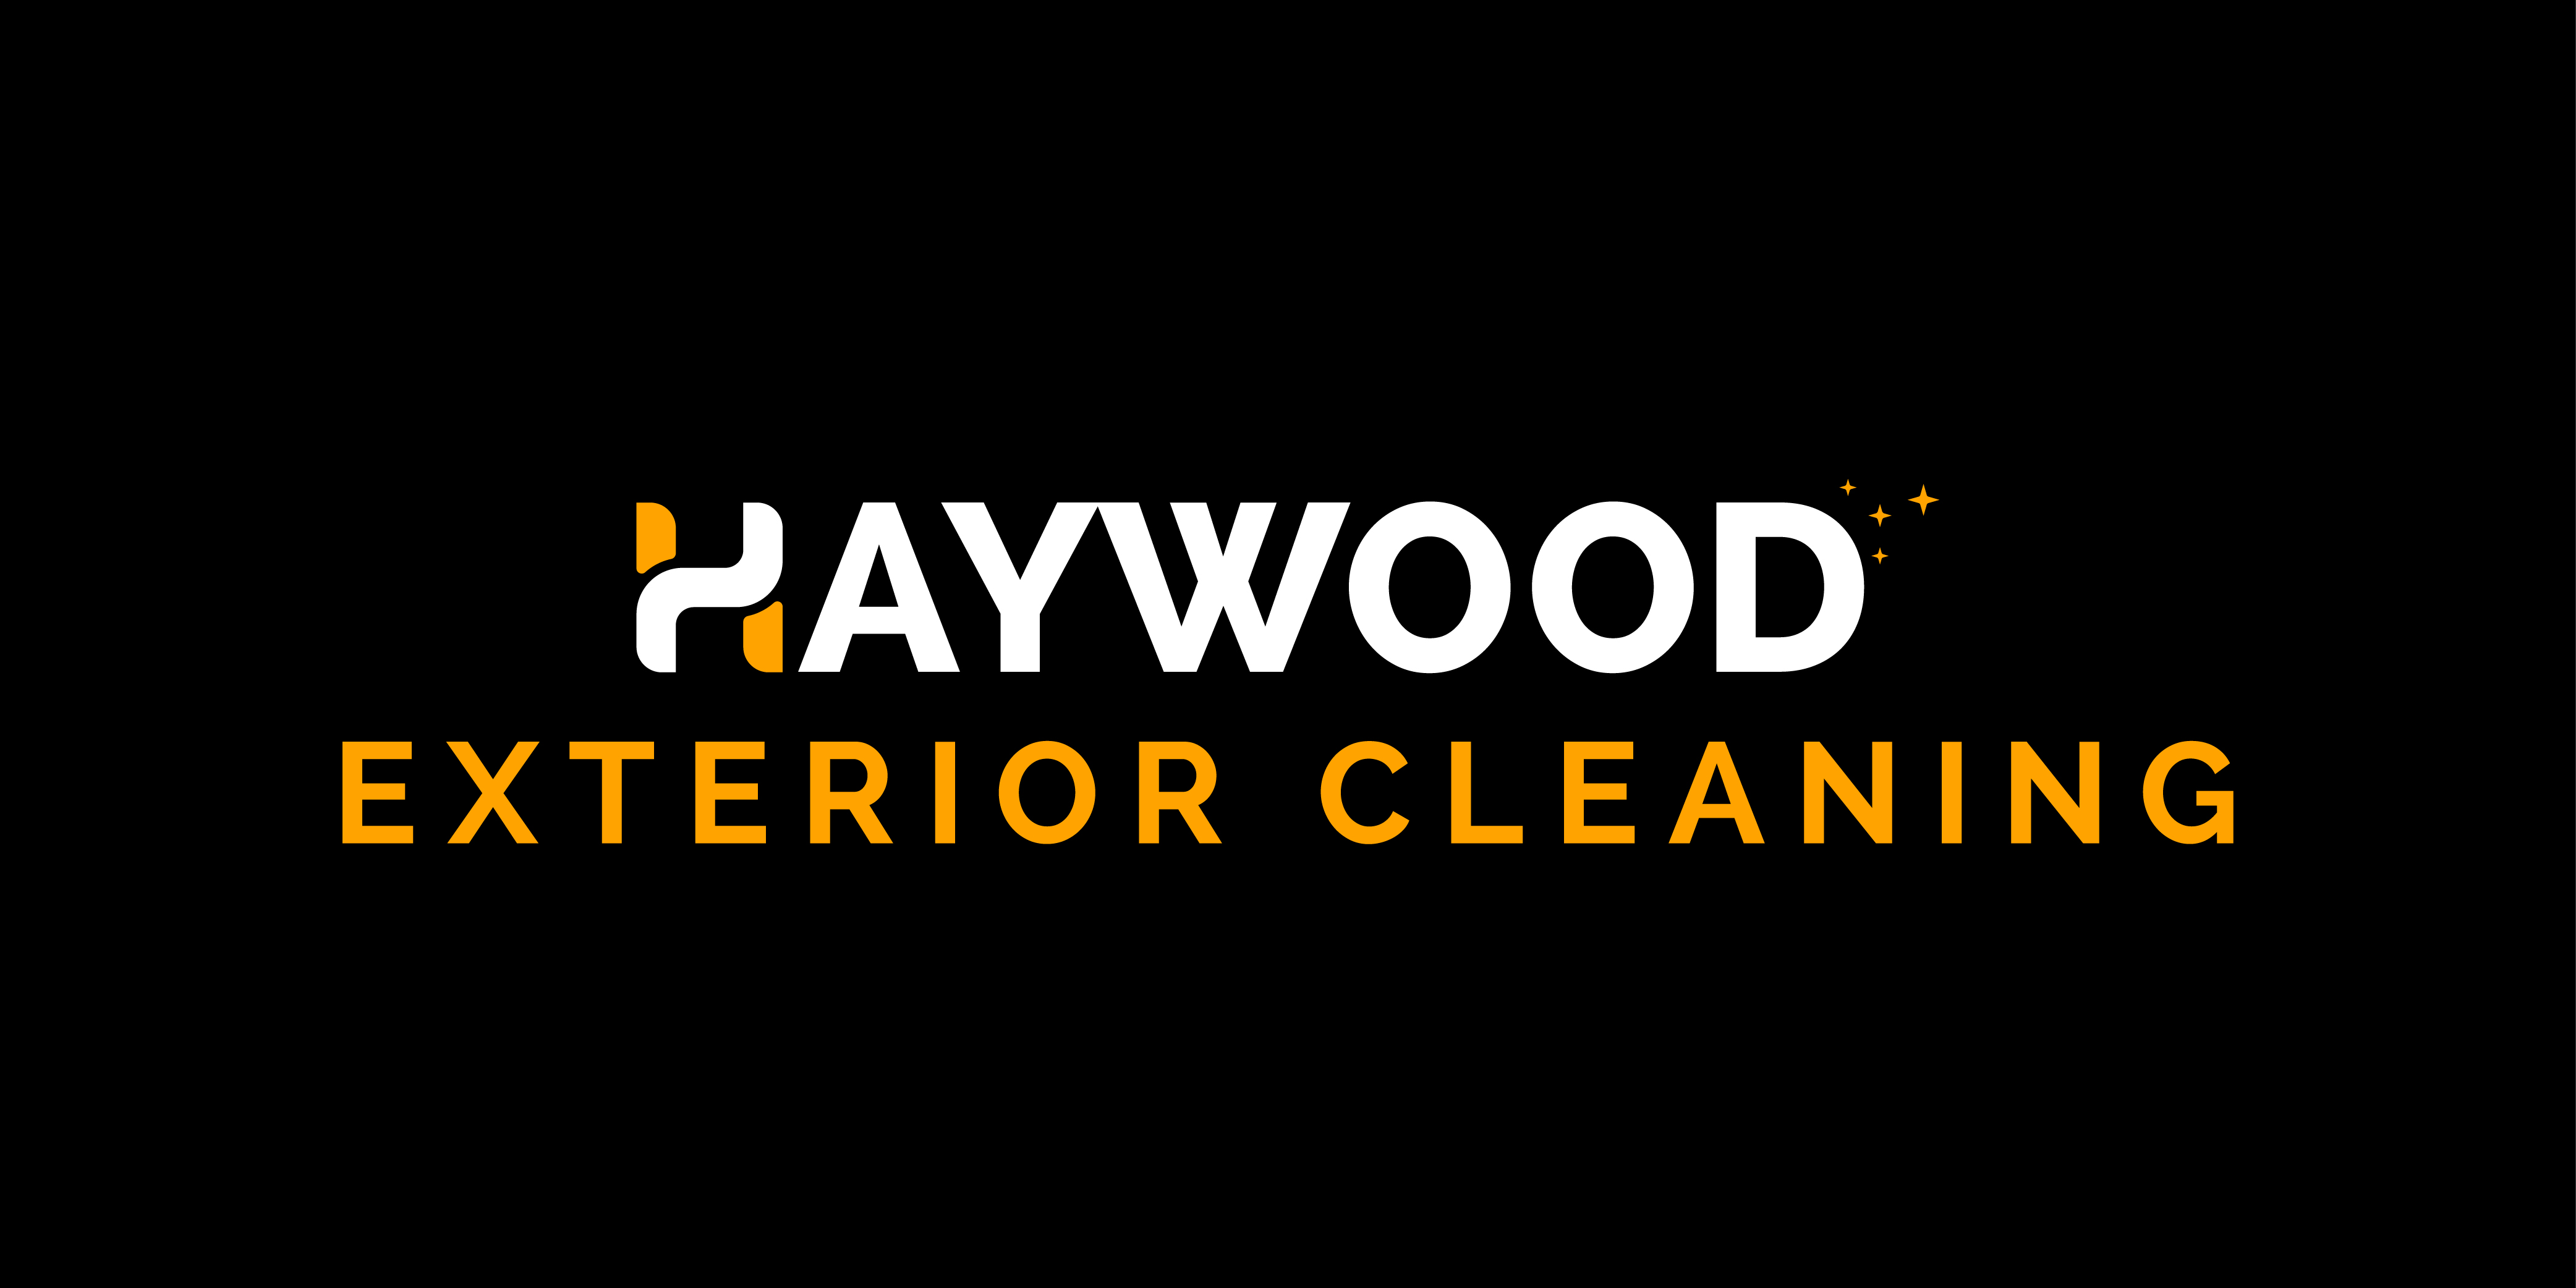 Haywood Exterior Cleaning Ltd